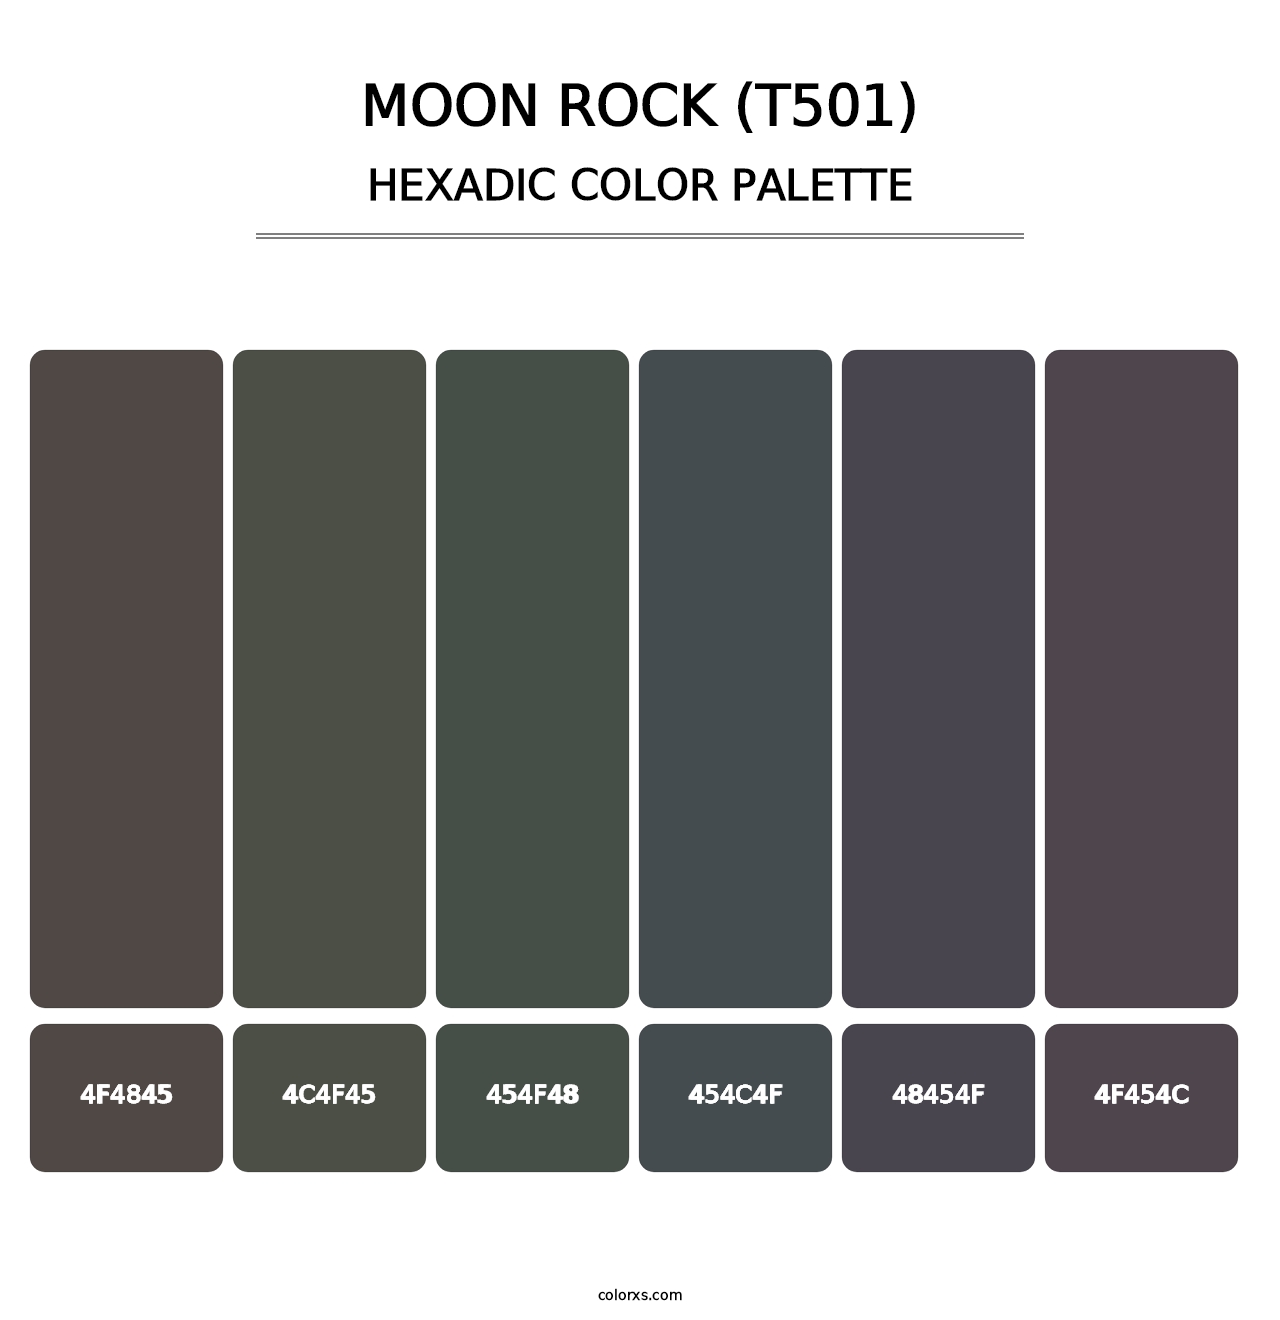 Moon Rock (T501) - Hexadic Color Palette